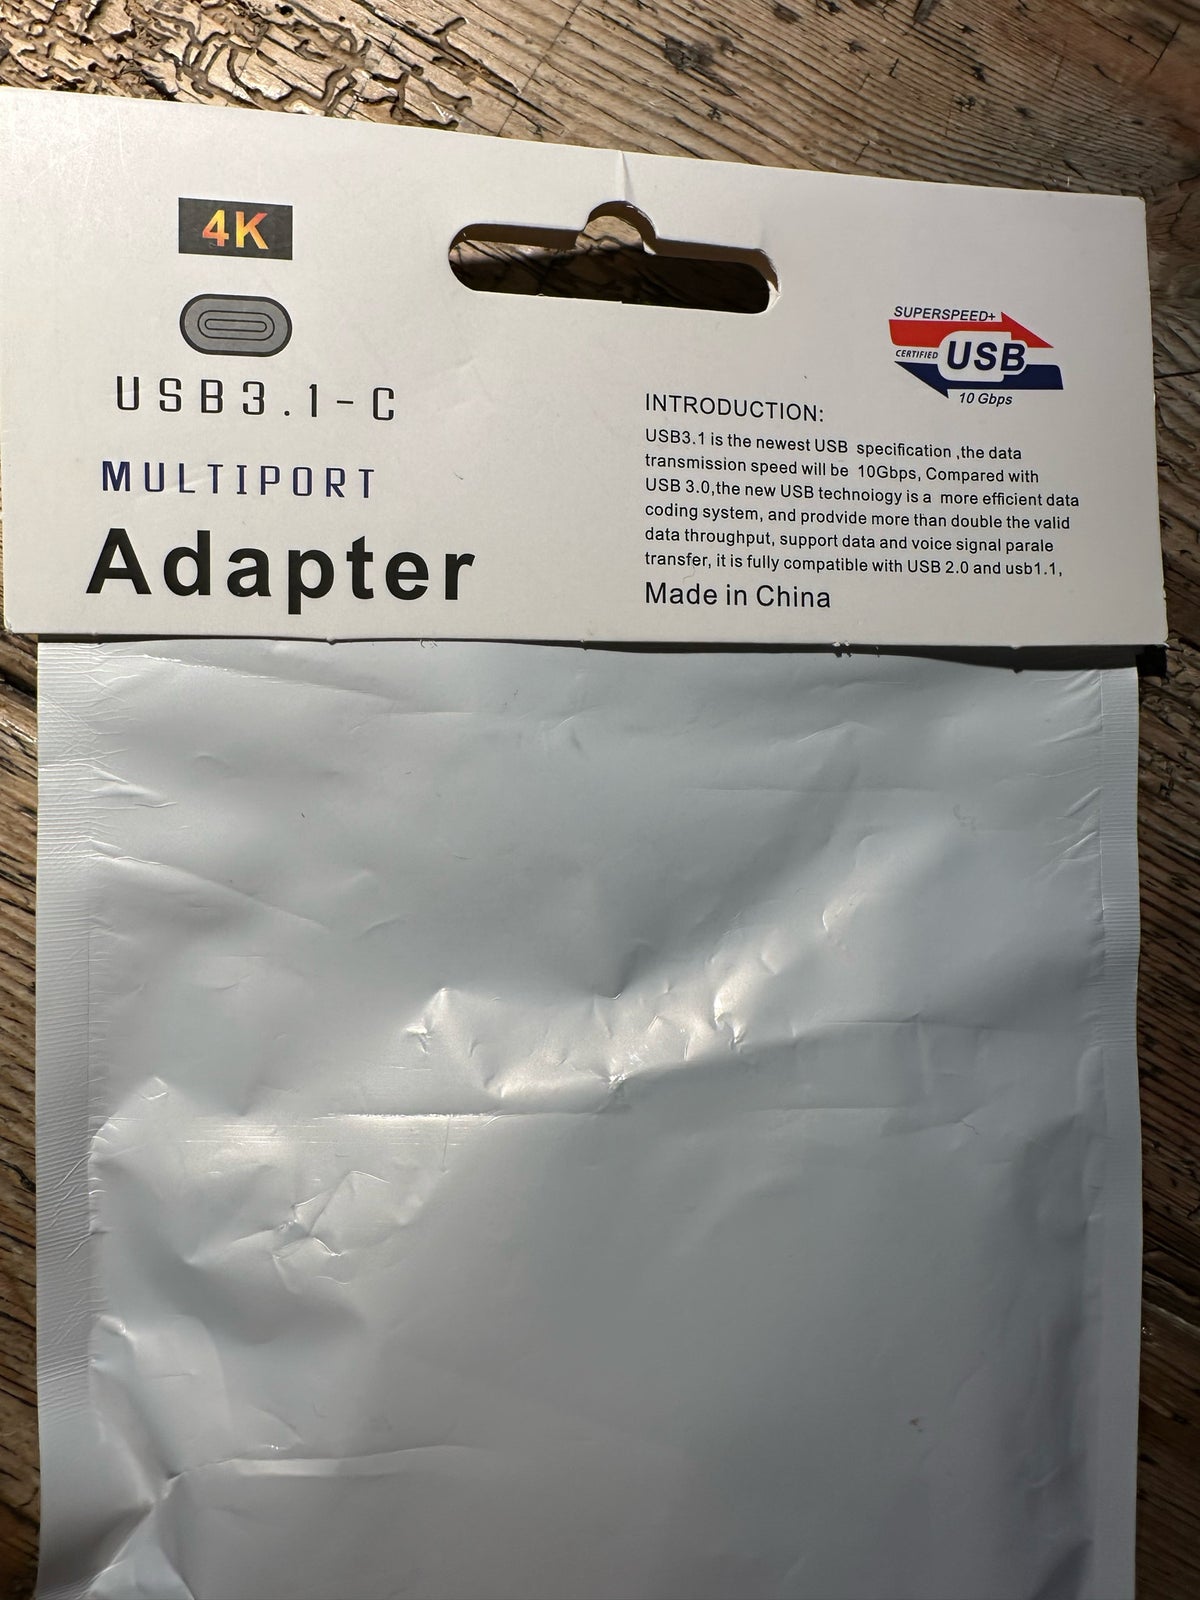 HDMI Adapter - 4K, Ved ikke, Perfekt